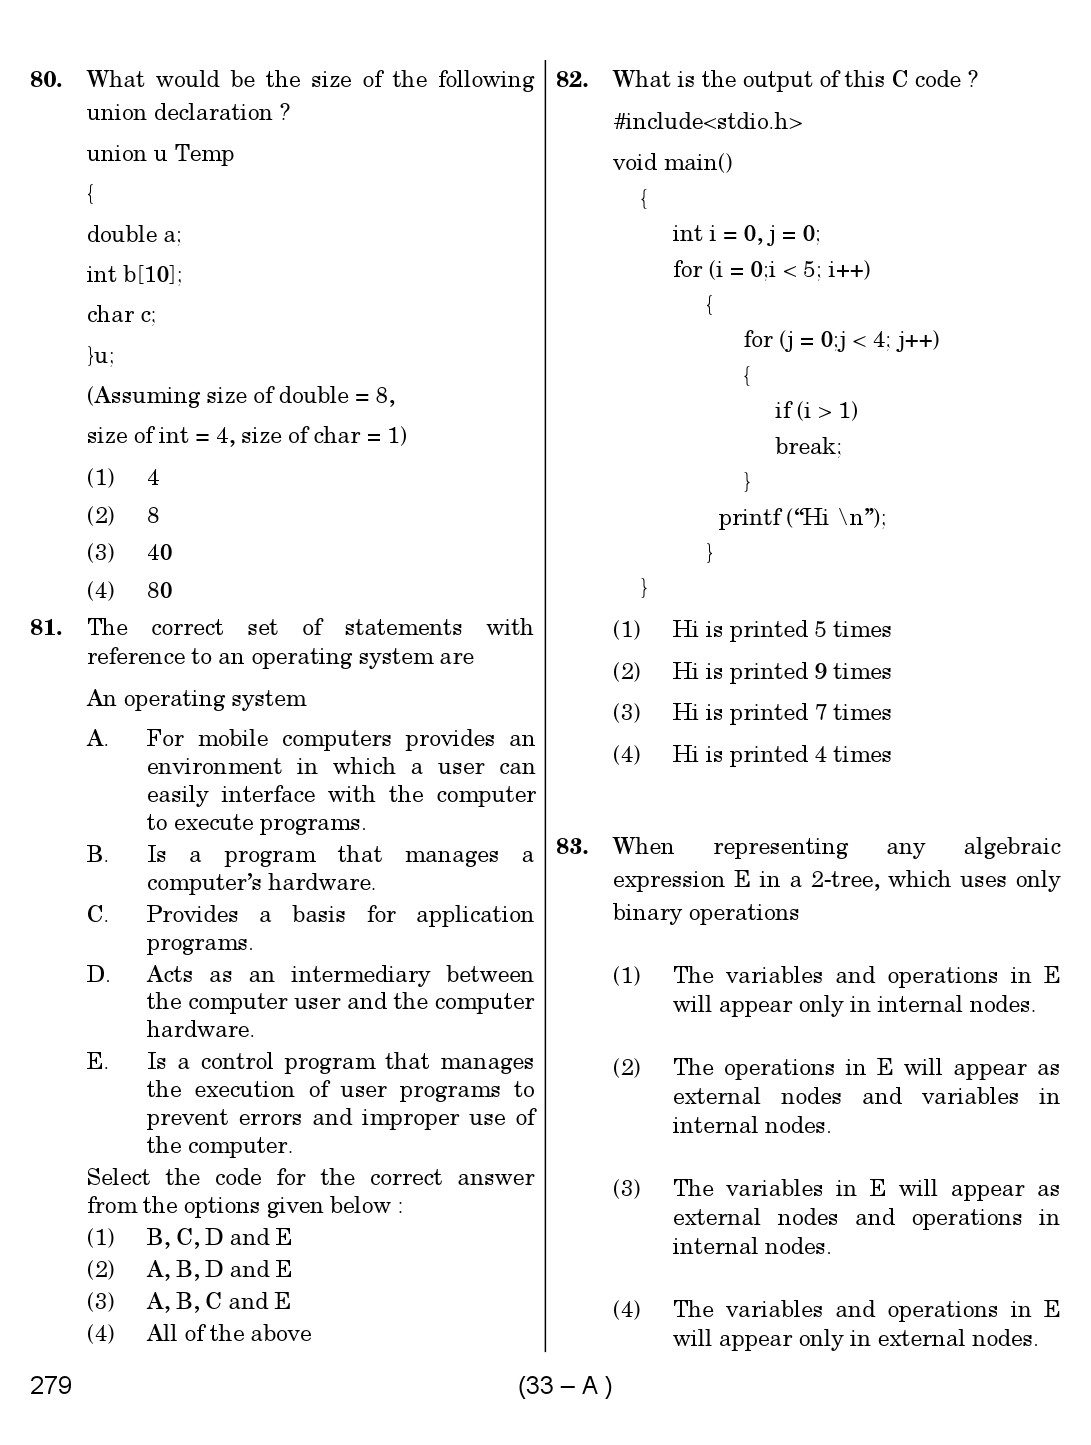 Karnataka PSC Computer Science Teachers Exam Sample Question Paper Subject code 279 33